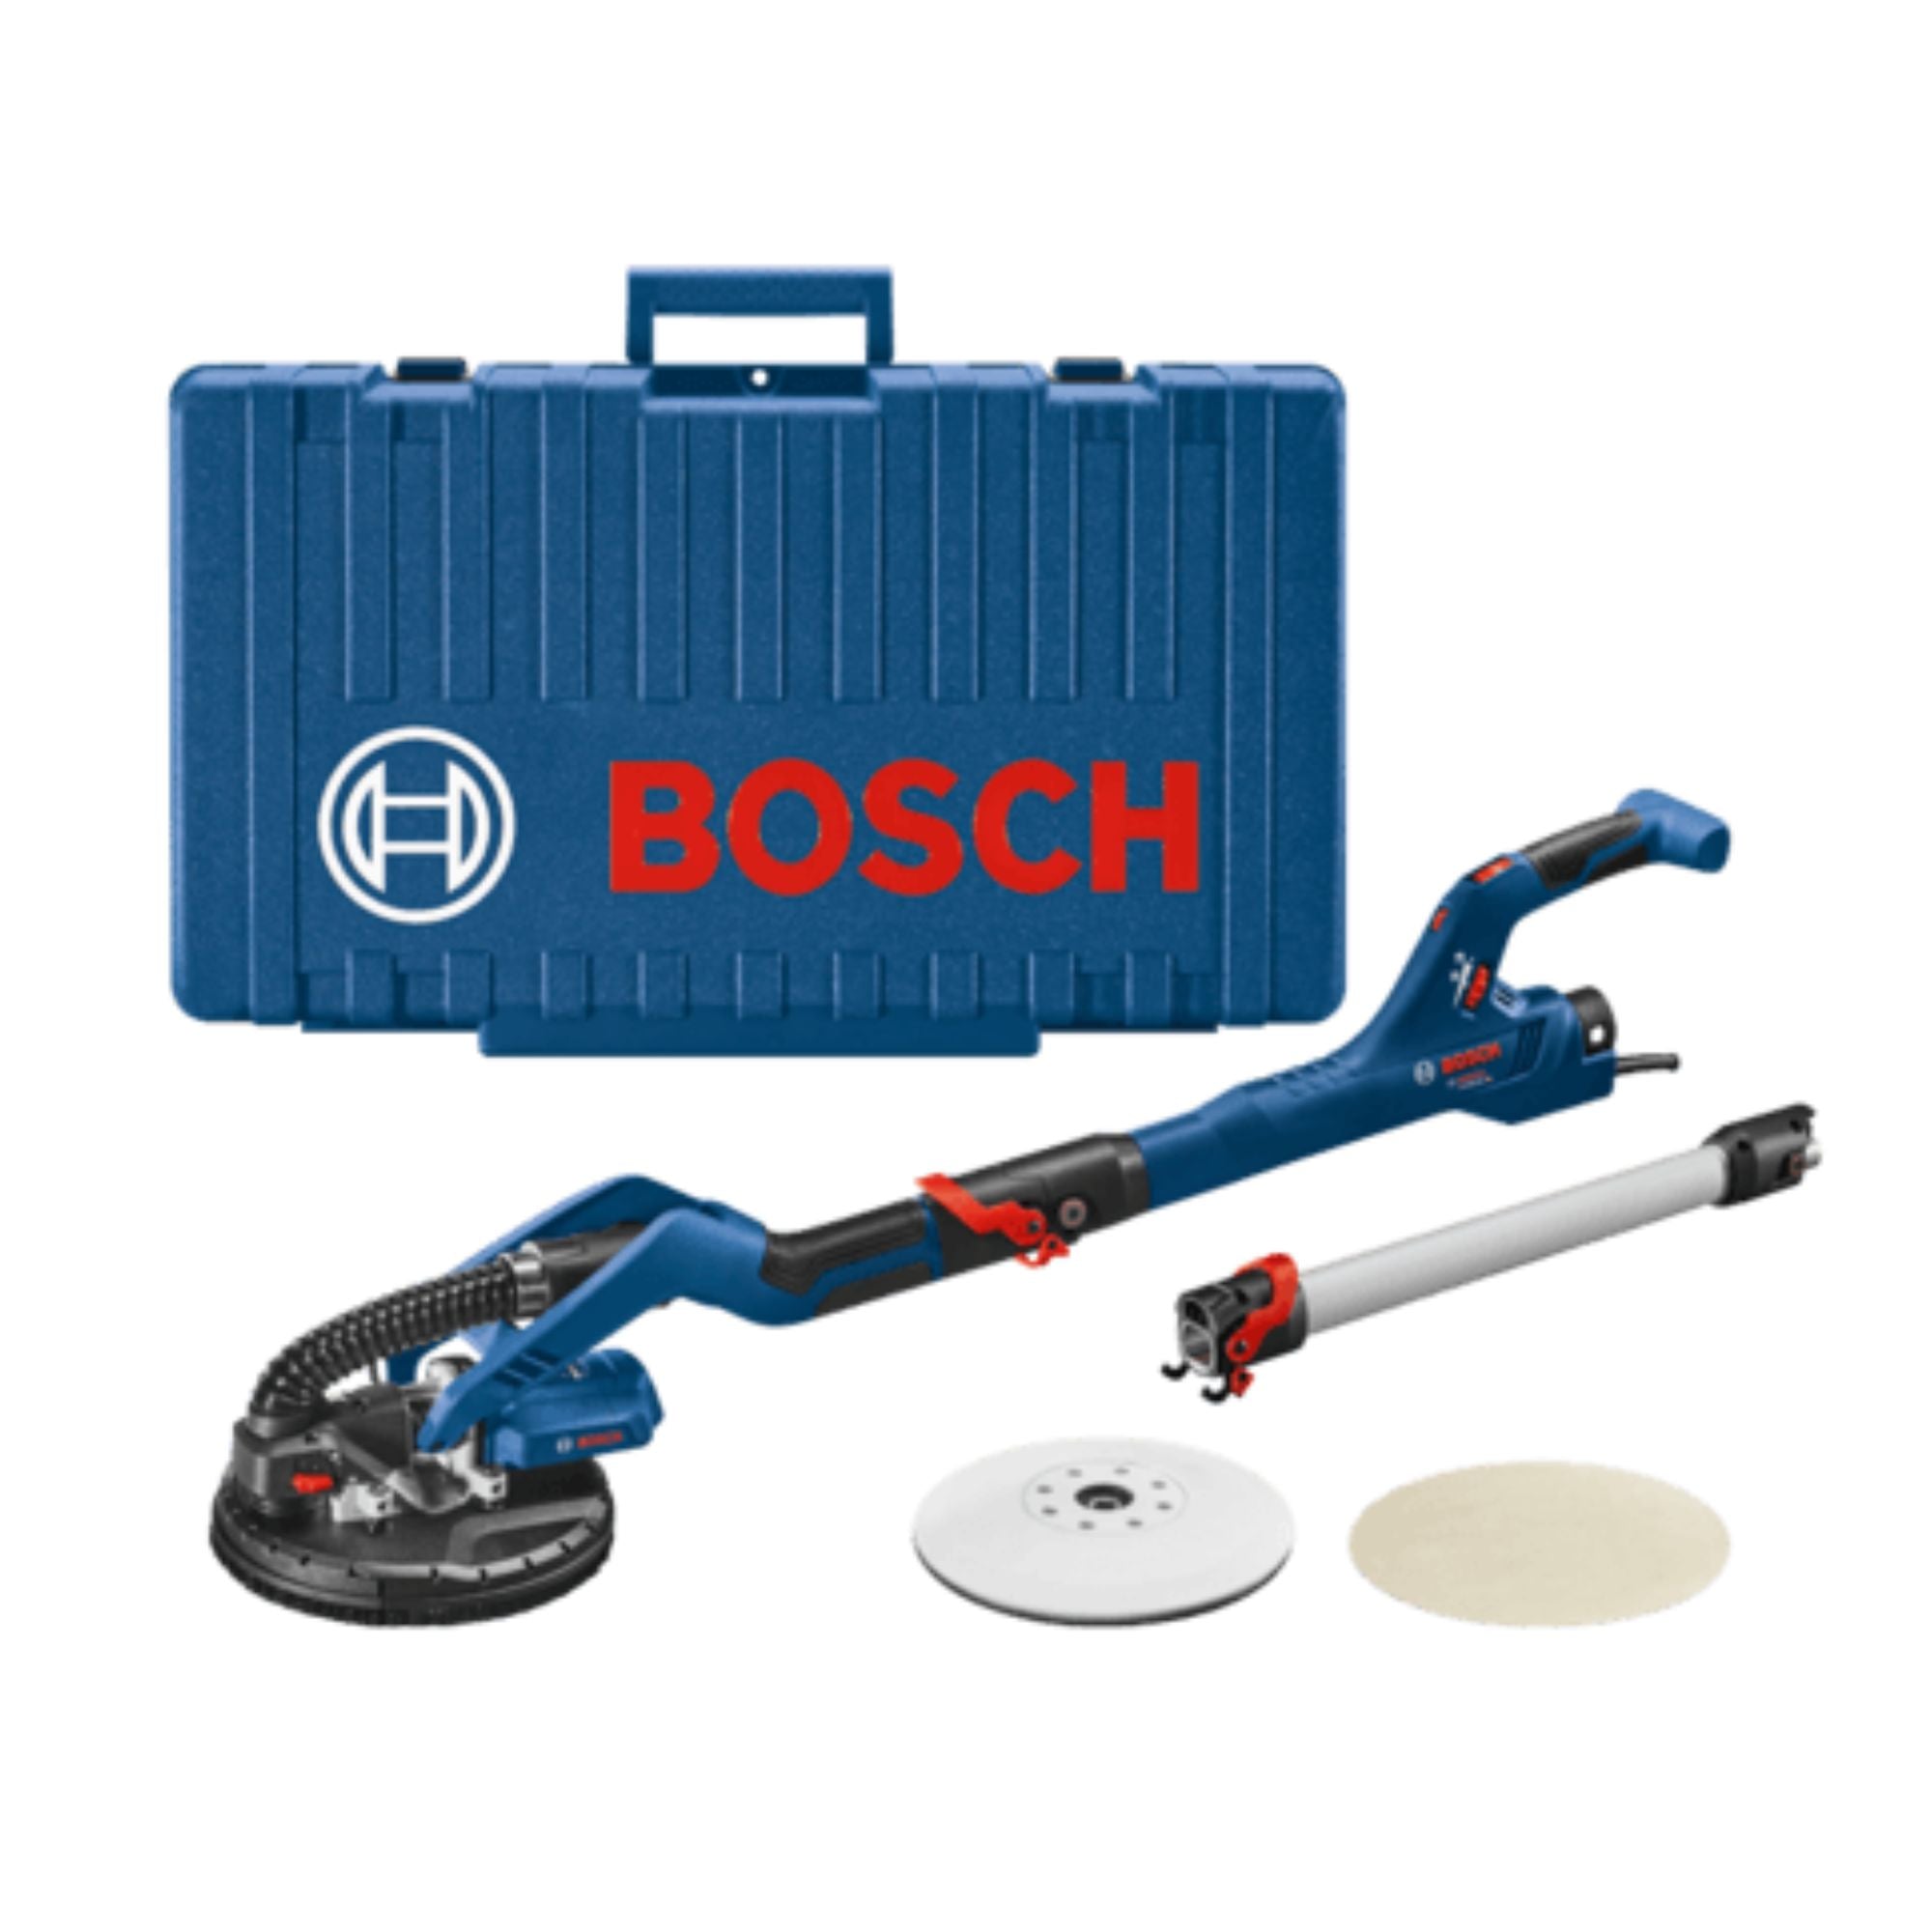 Bosch GTR55-85 9 pulgadas. Kit de lijadora eléctrica para paneles de yeso